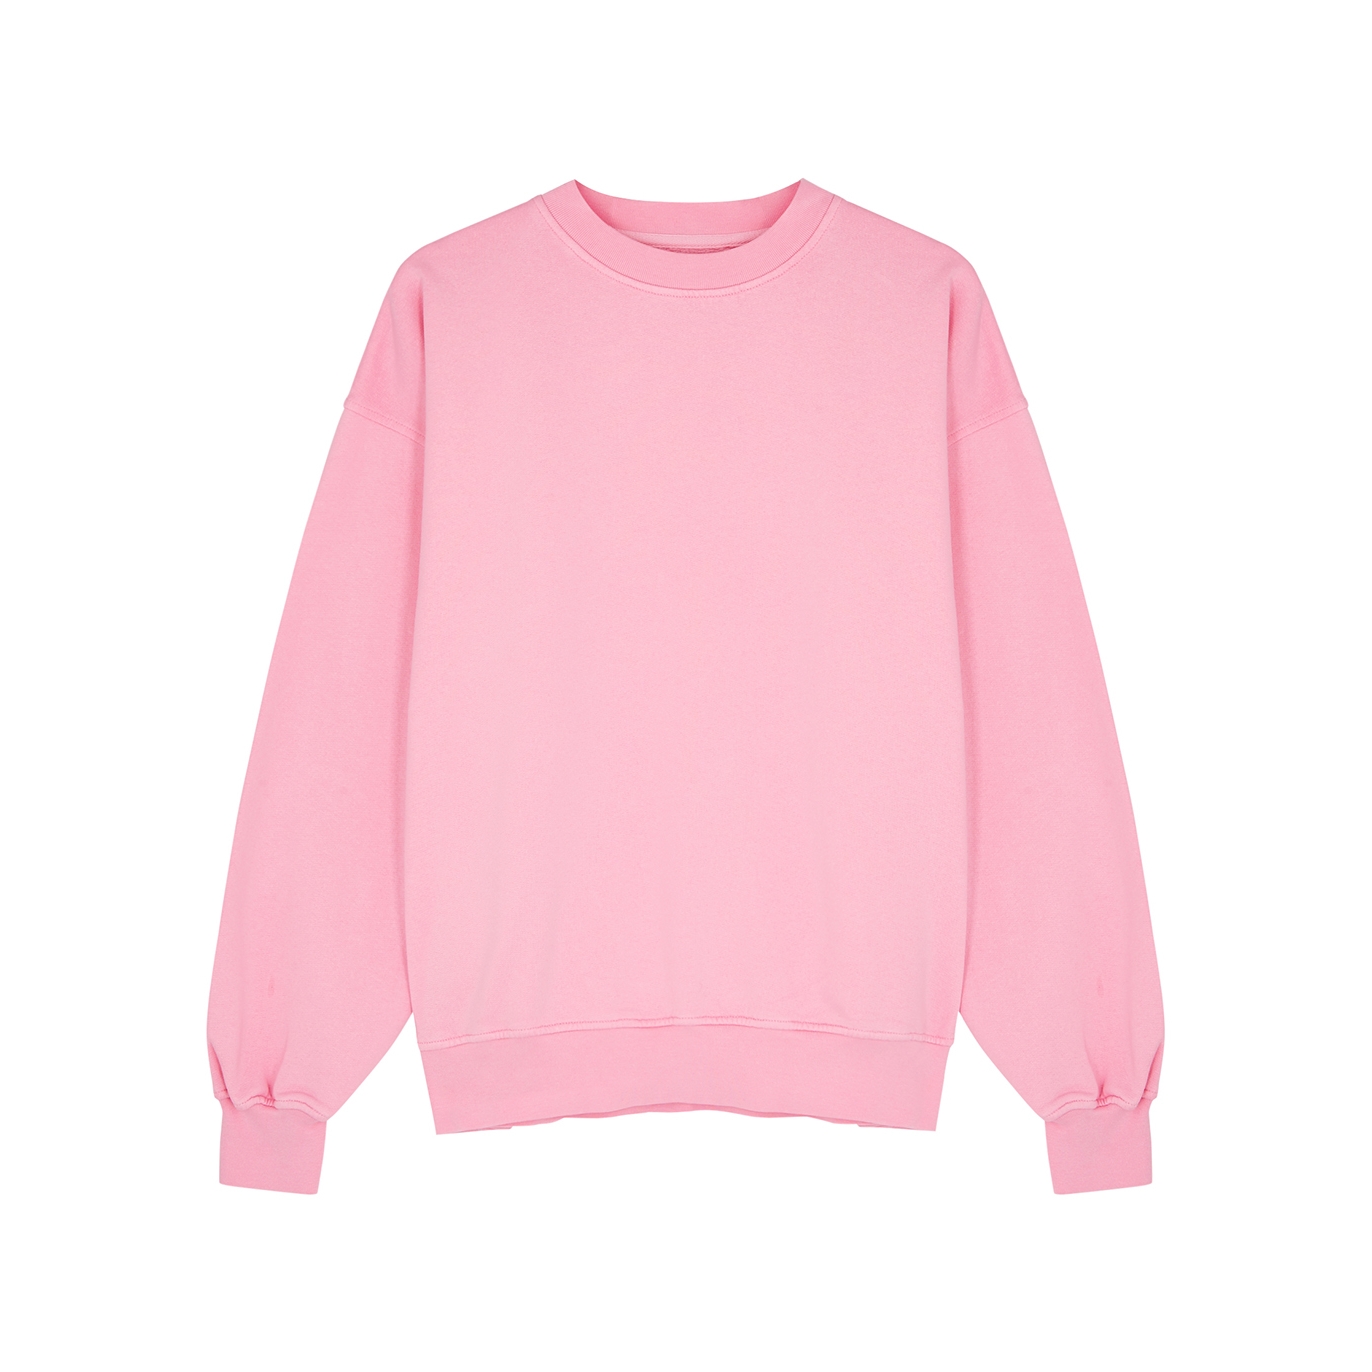 Colorful Standard Pink Cotton Sweatshirt